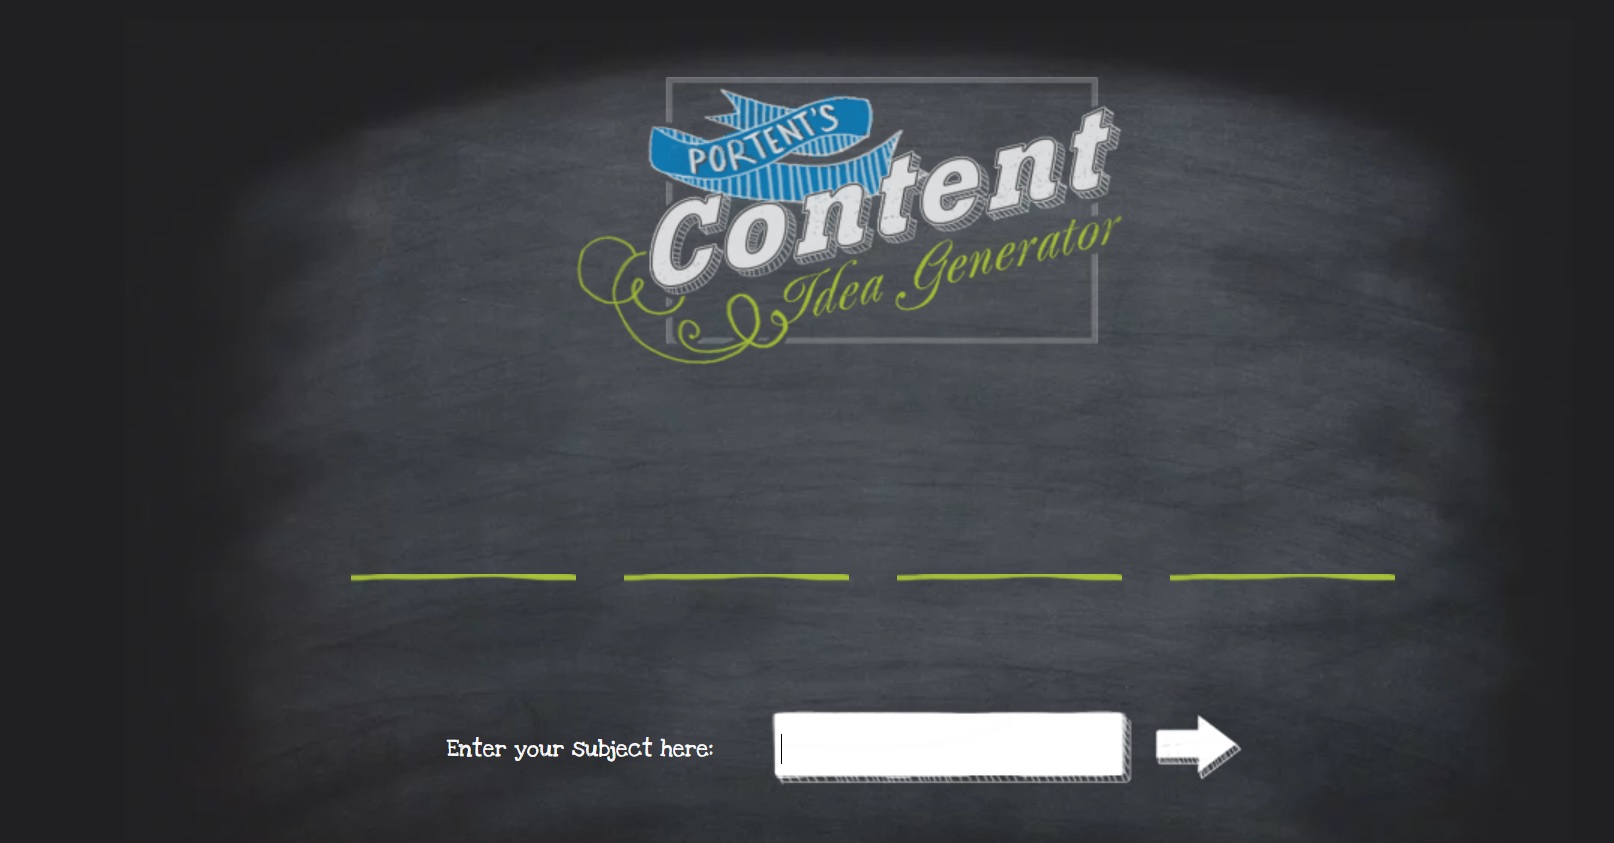 Portent Content Idea Generator - Idunn | Drive. Engage. Convert.